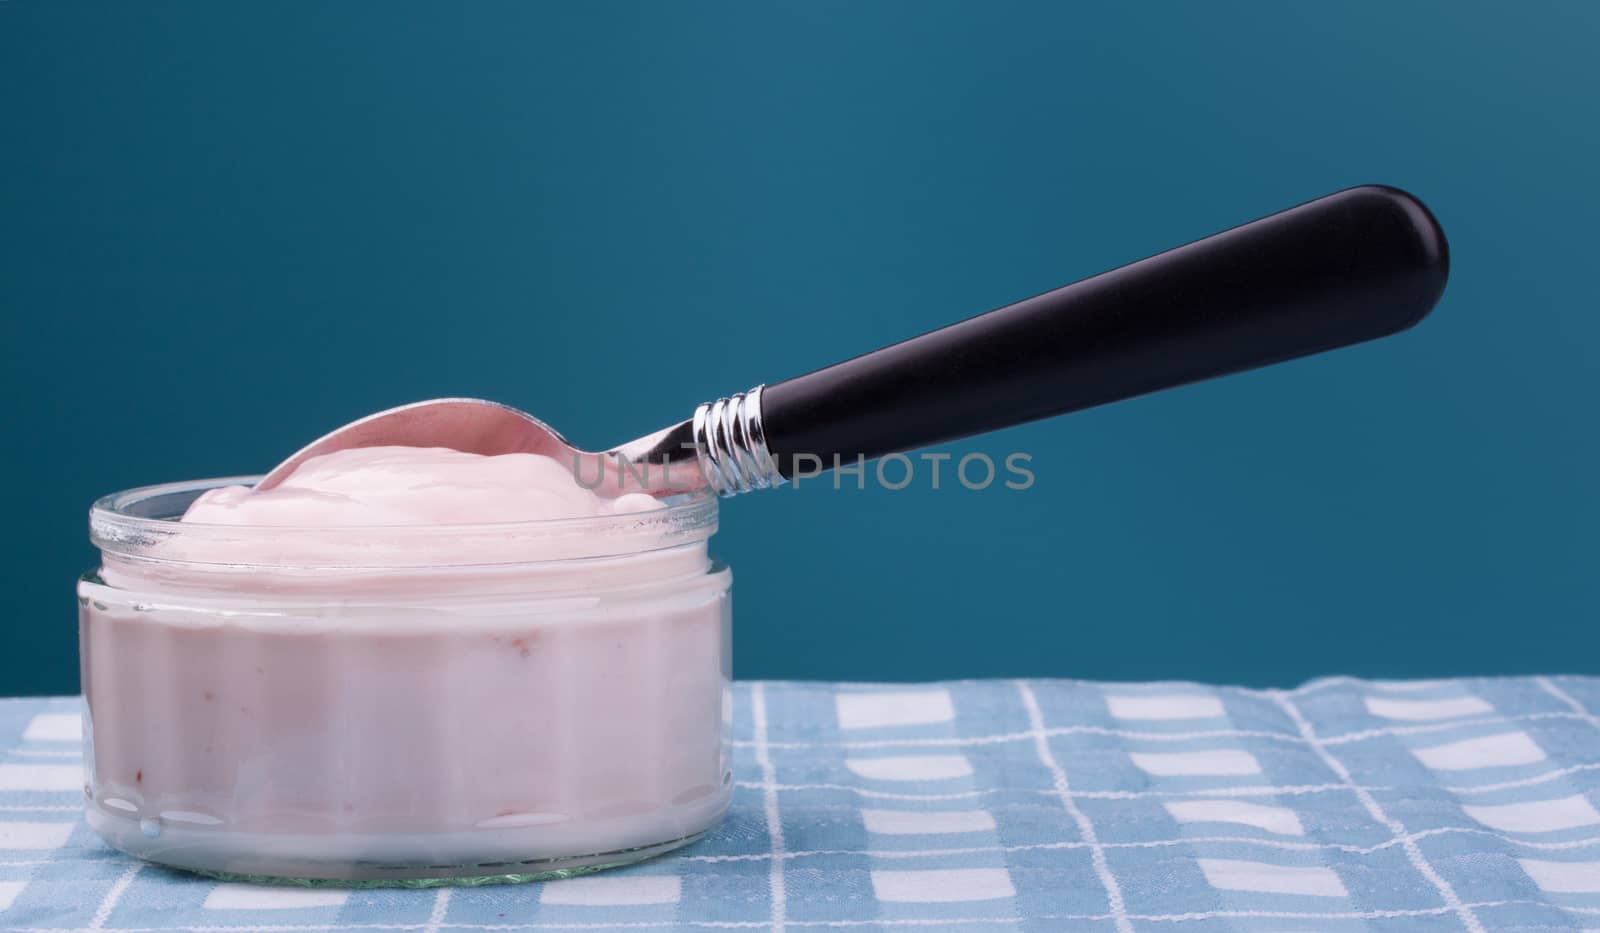 Pink strawberry yogurt in a clear glass bowl